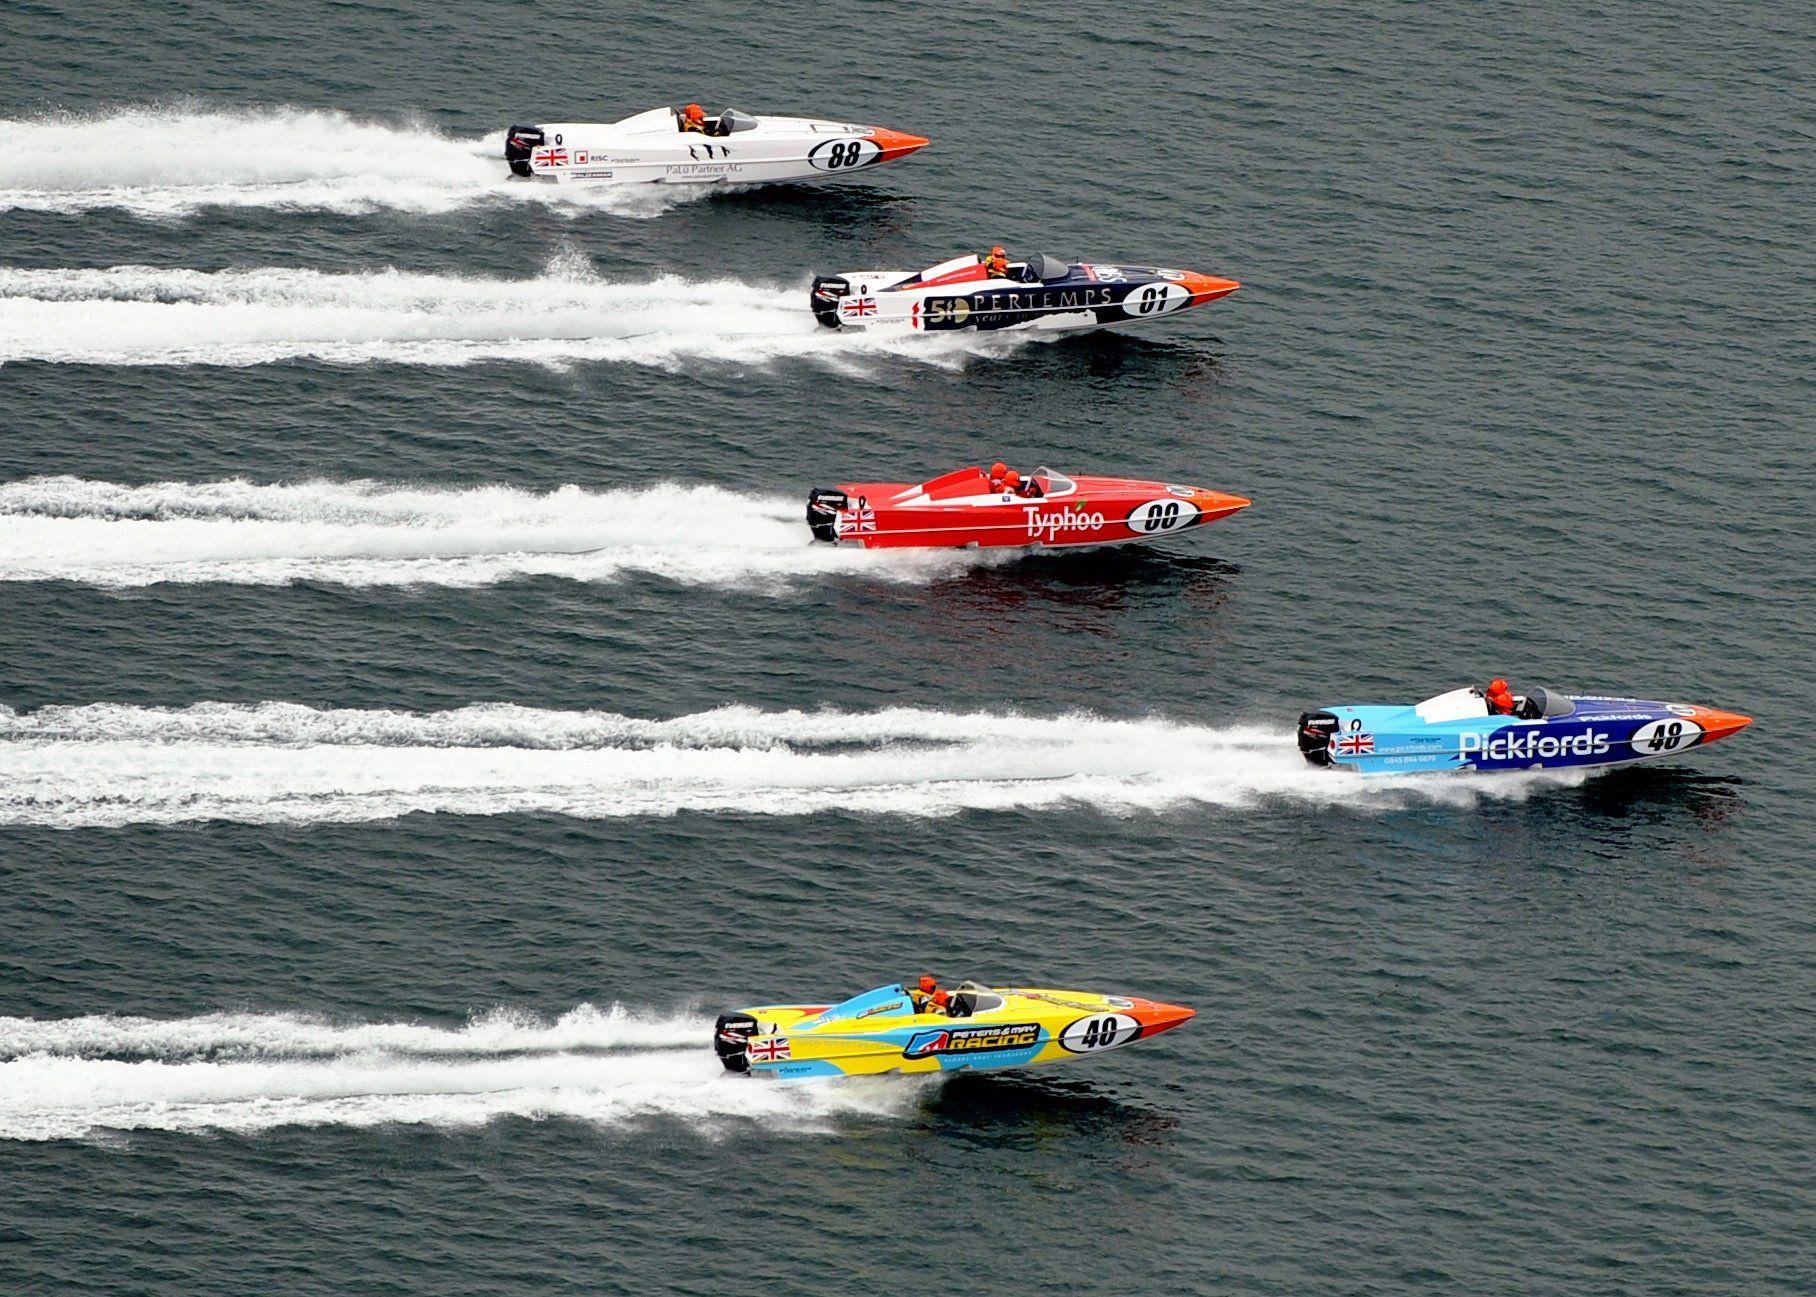 POWERBOAT boat ship race racing superboat custom cigarette